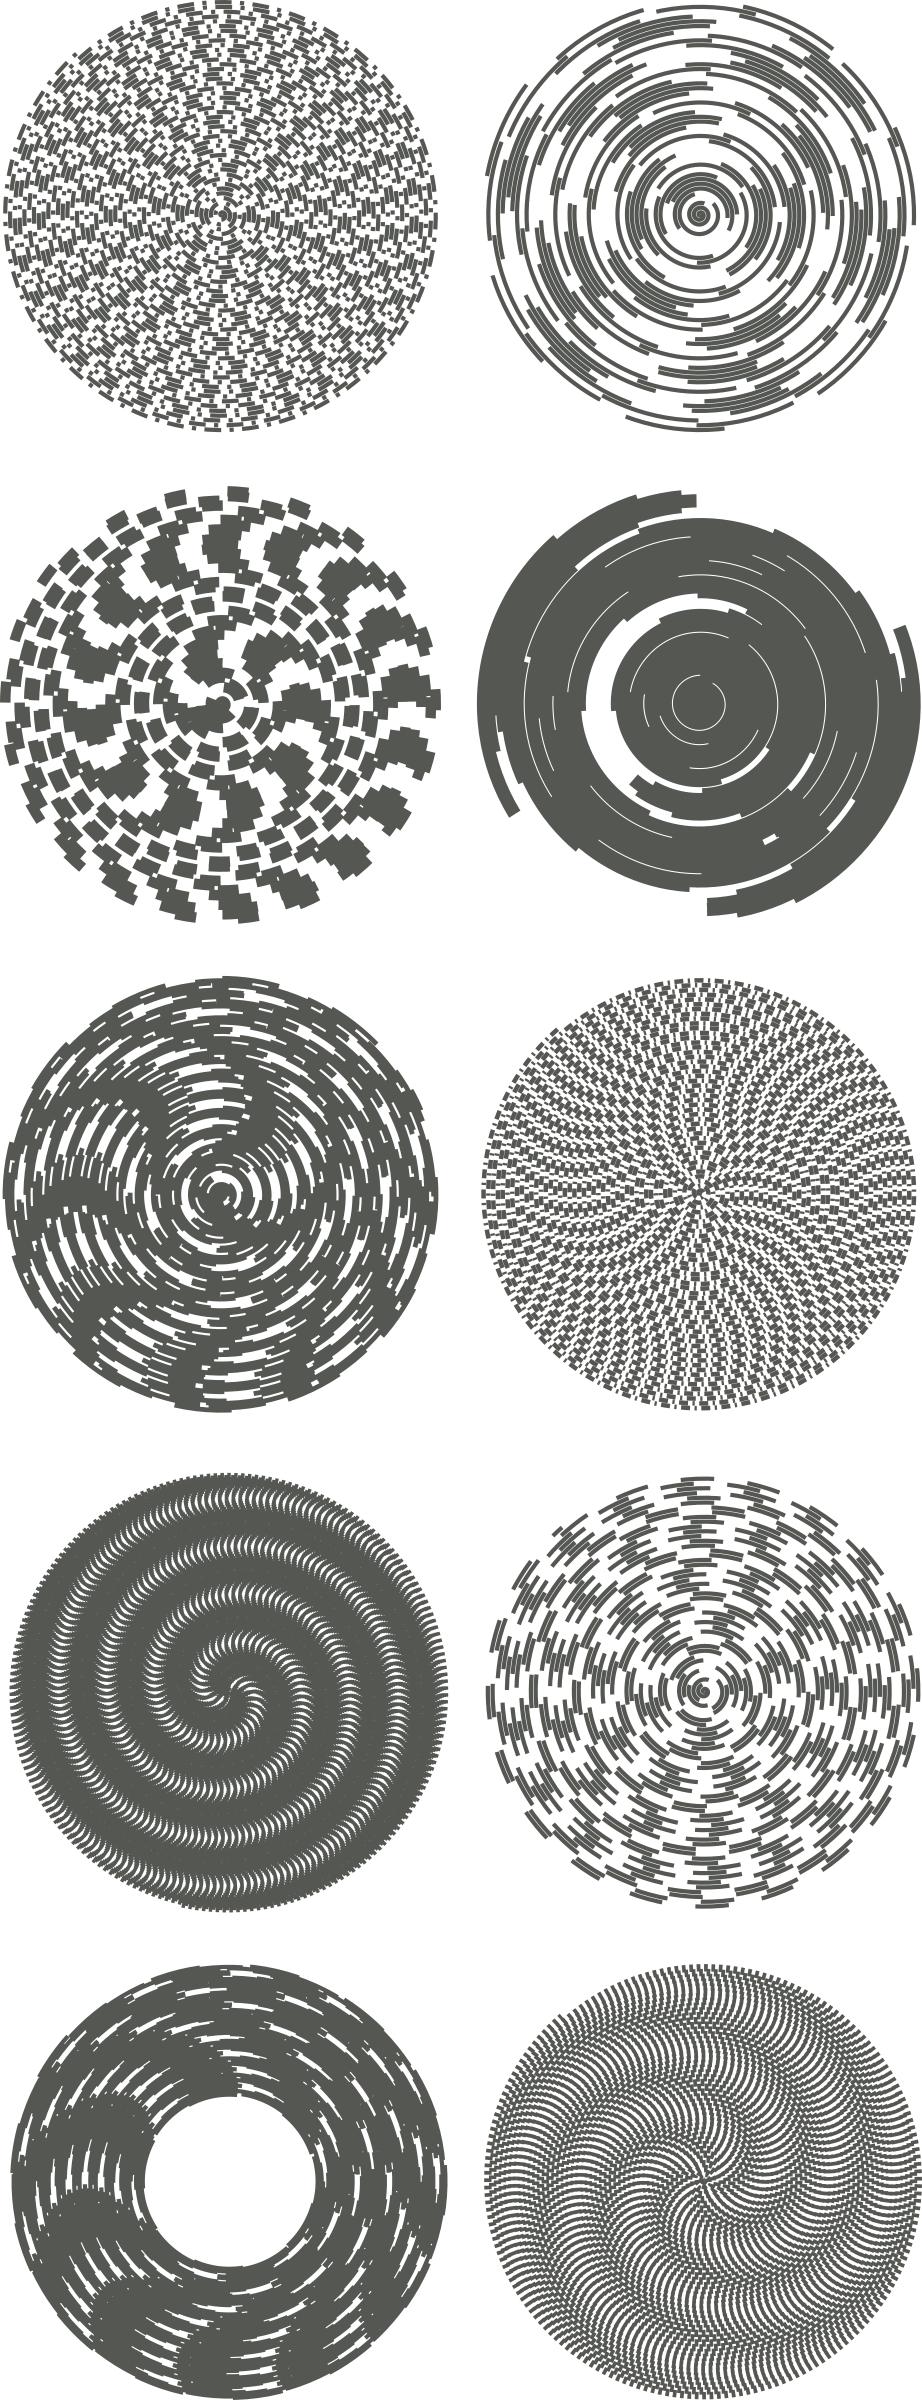 spiral designs png